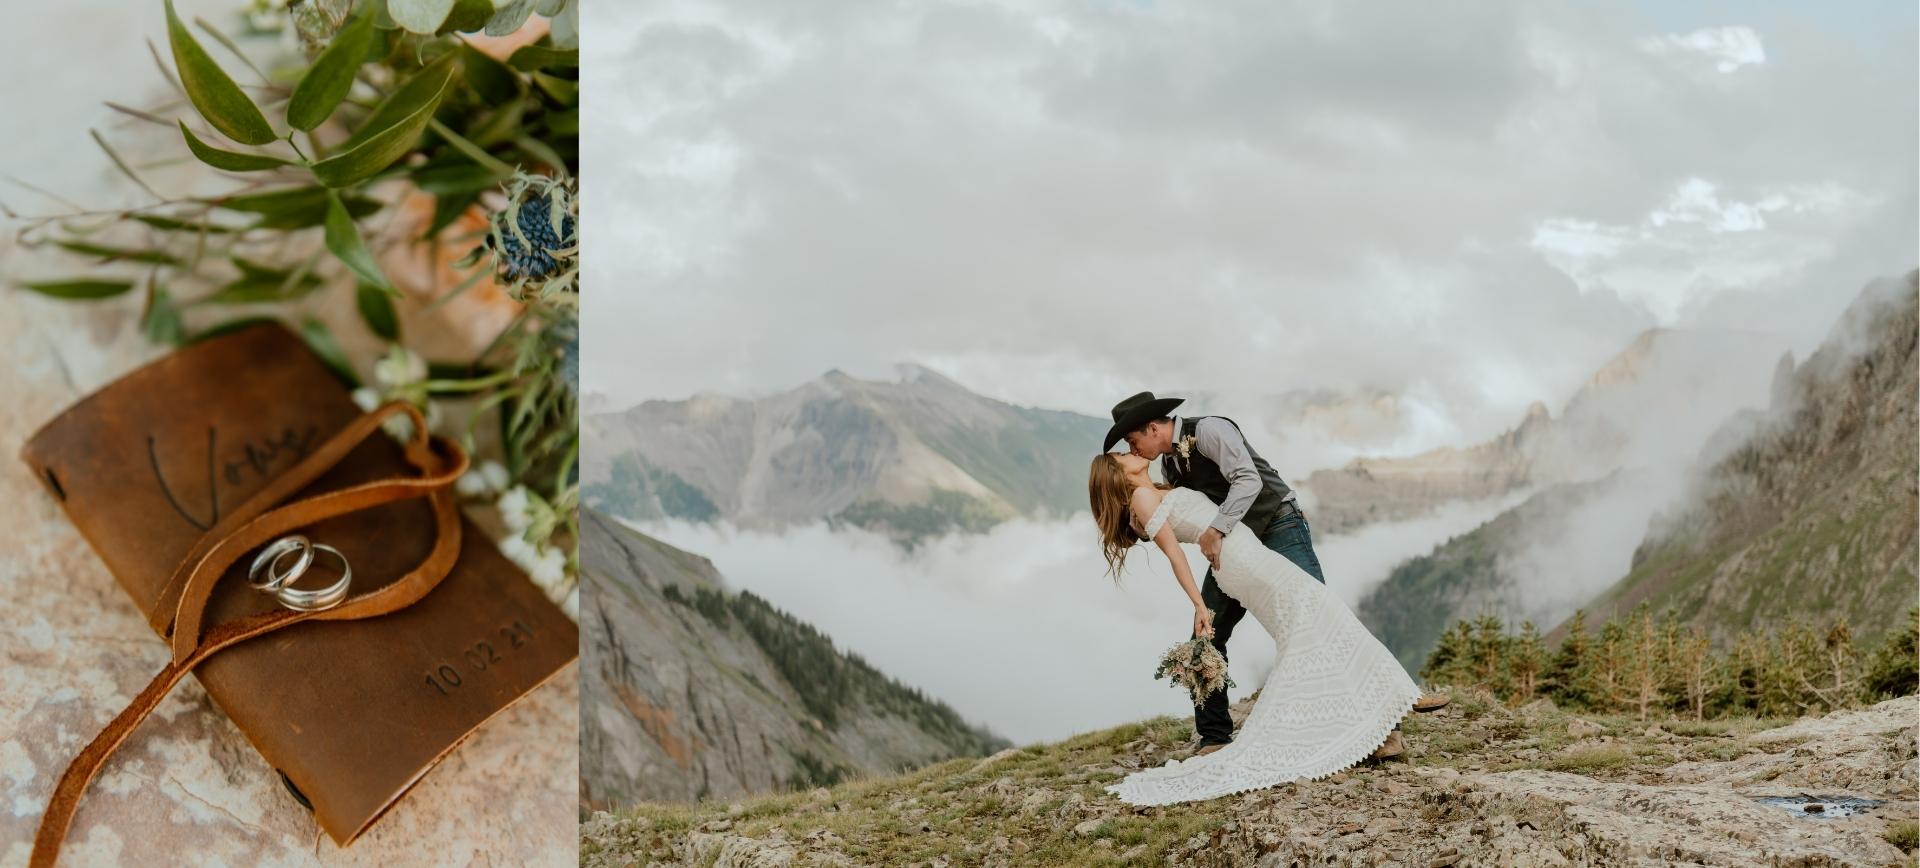 colorado mountain elopement - off road adventure wedding package - bride and groom in breathtaking scenery